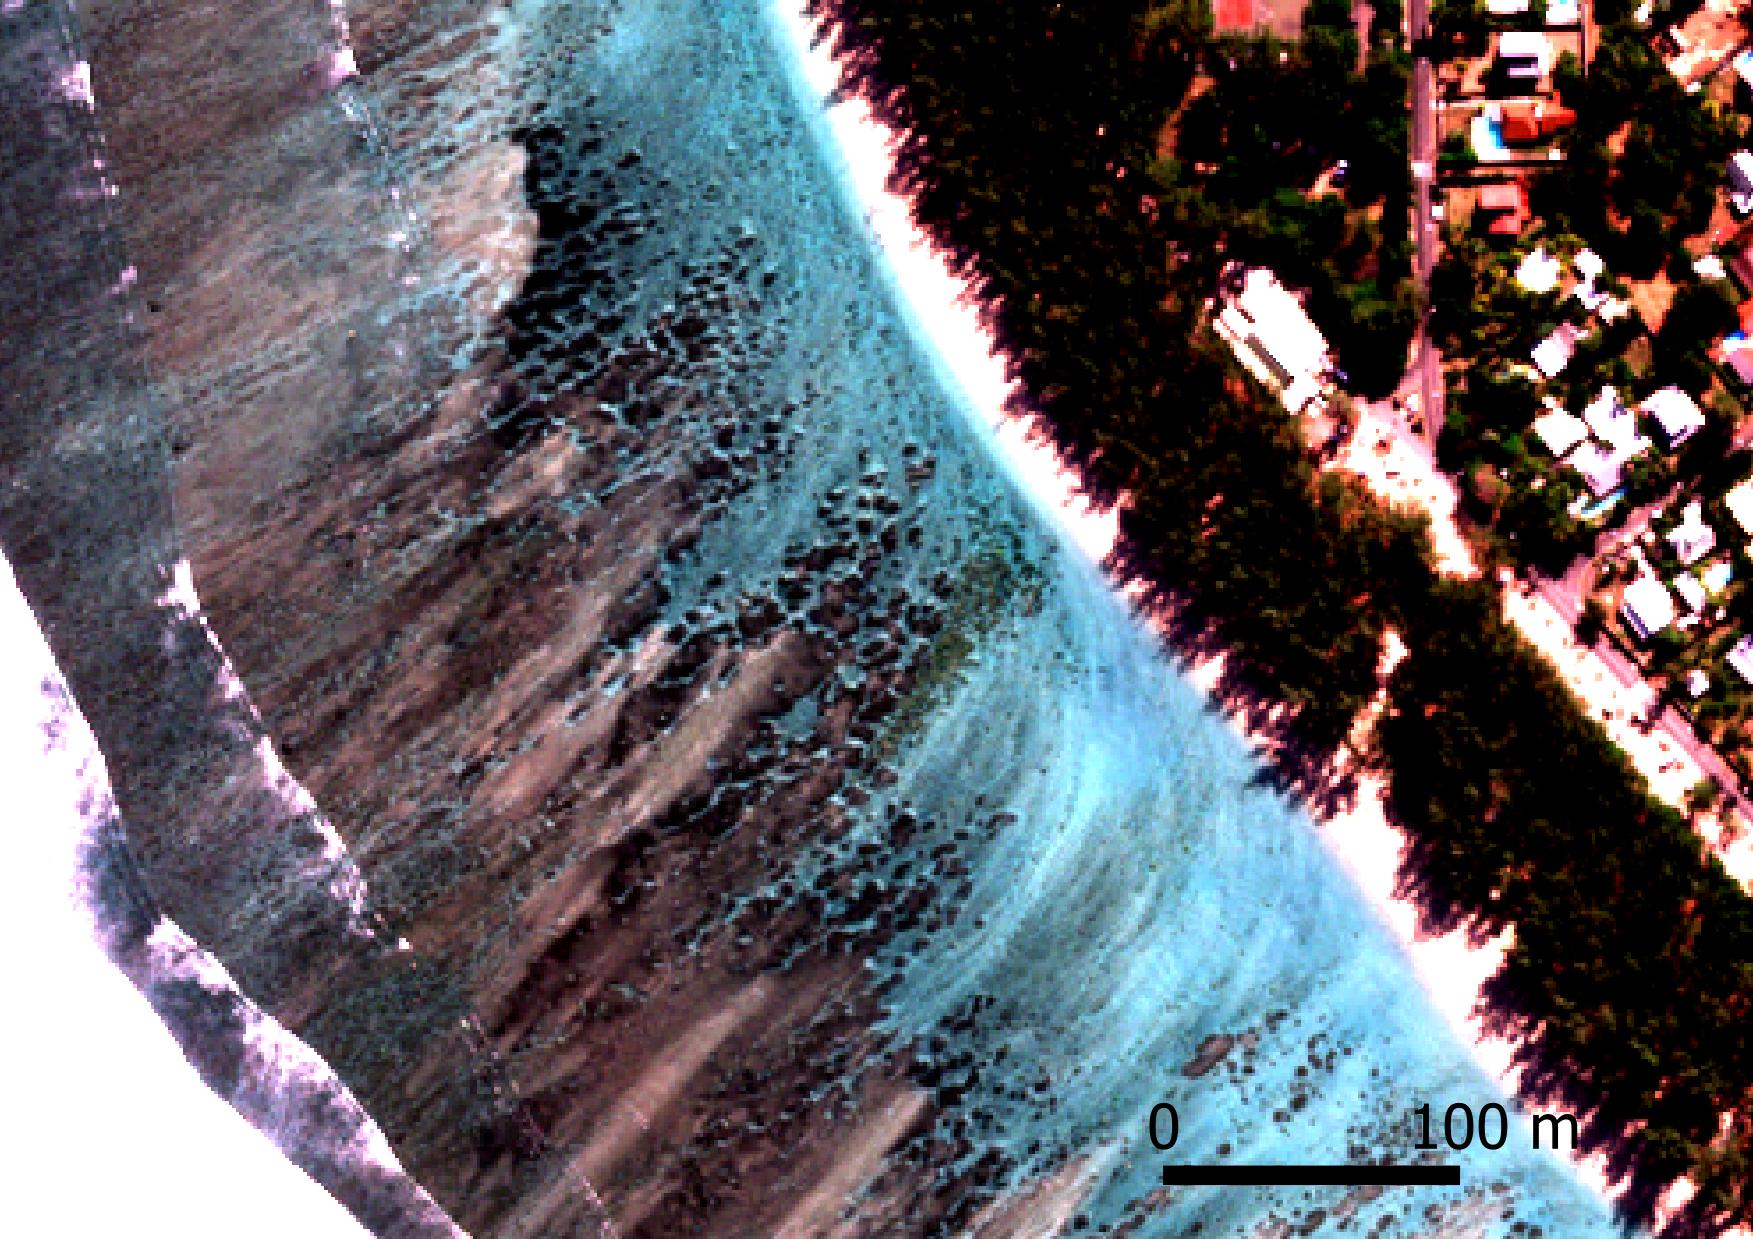 Pléiades satellite image